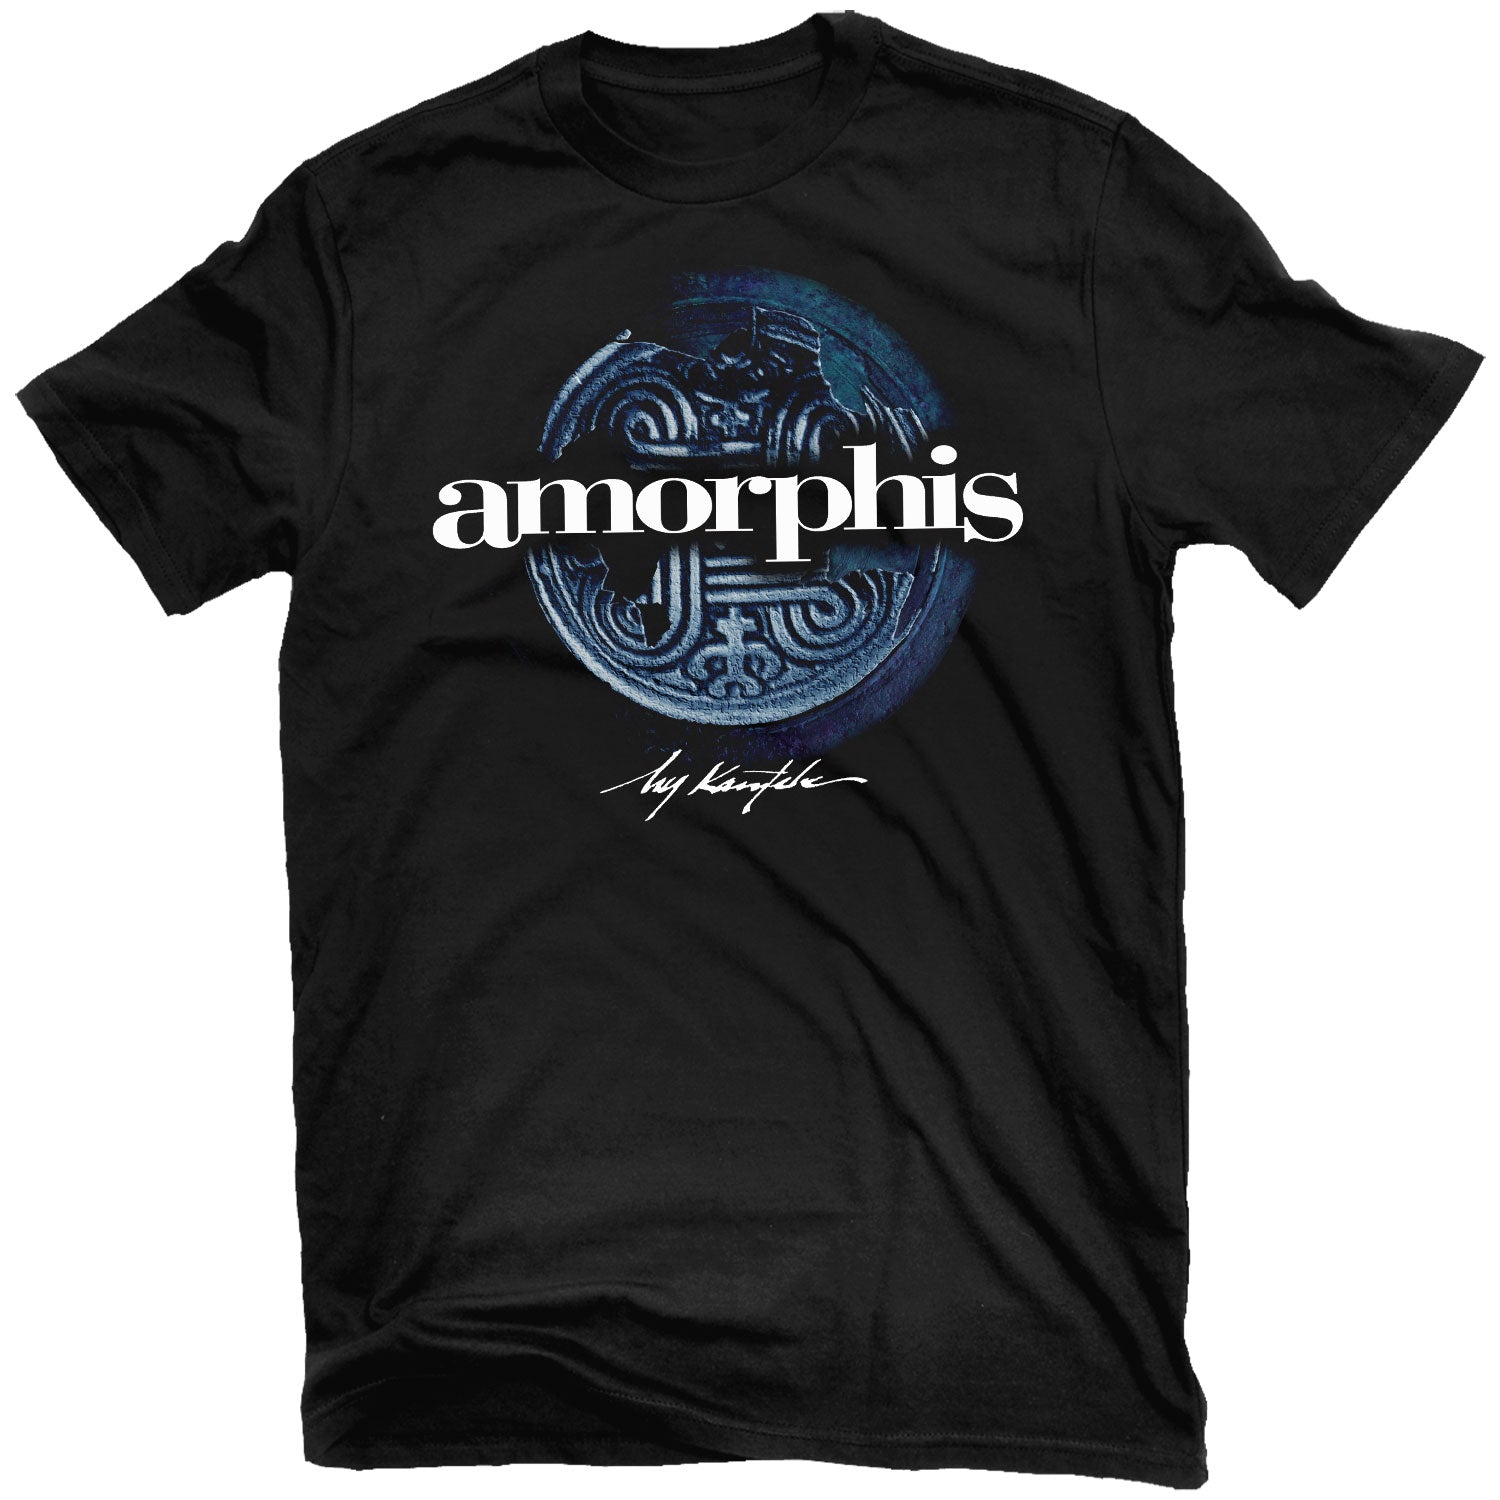 Amorphis "My Kantele" T-Shirt